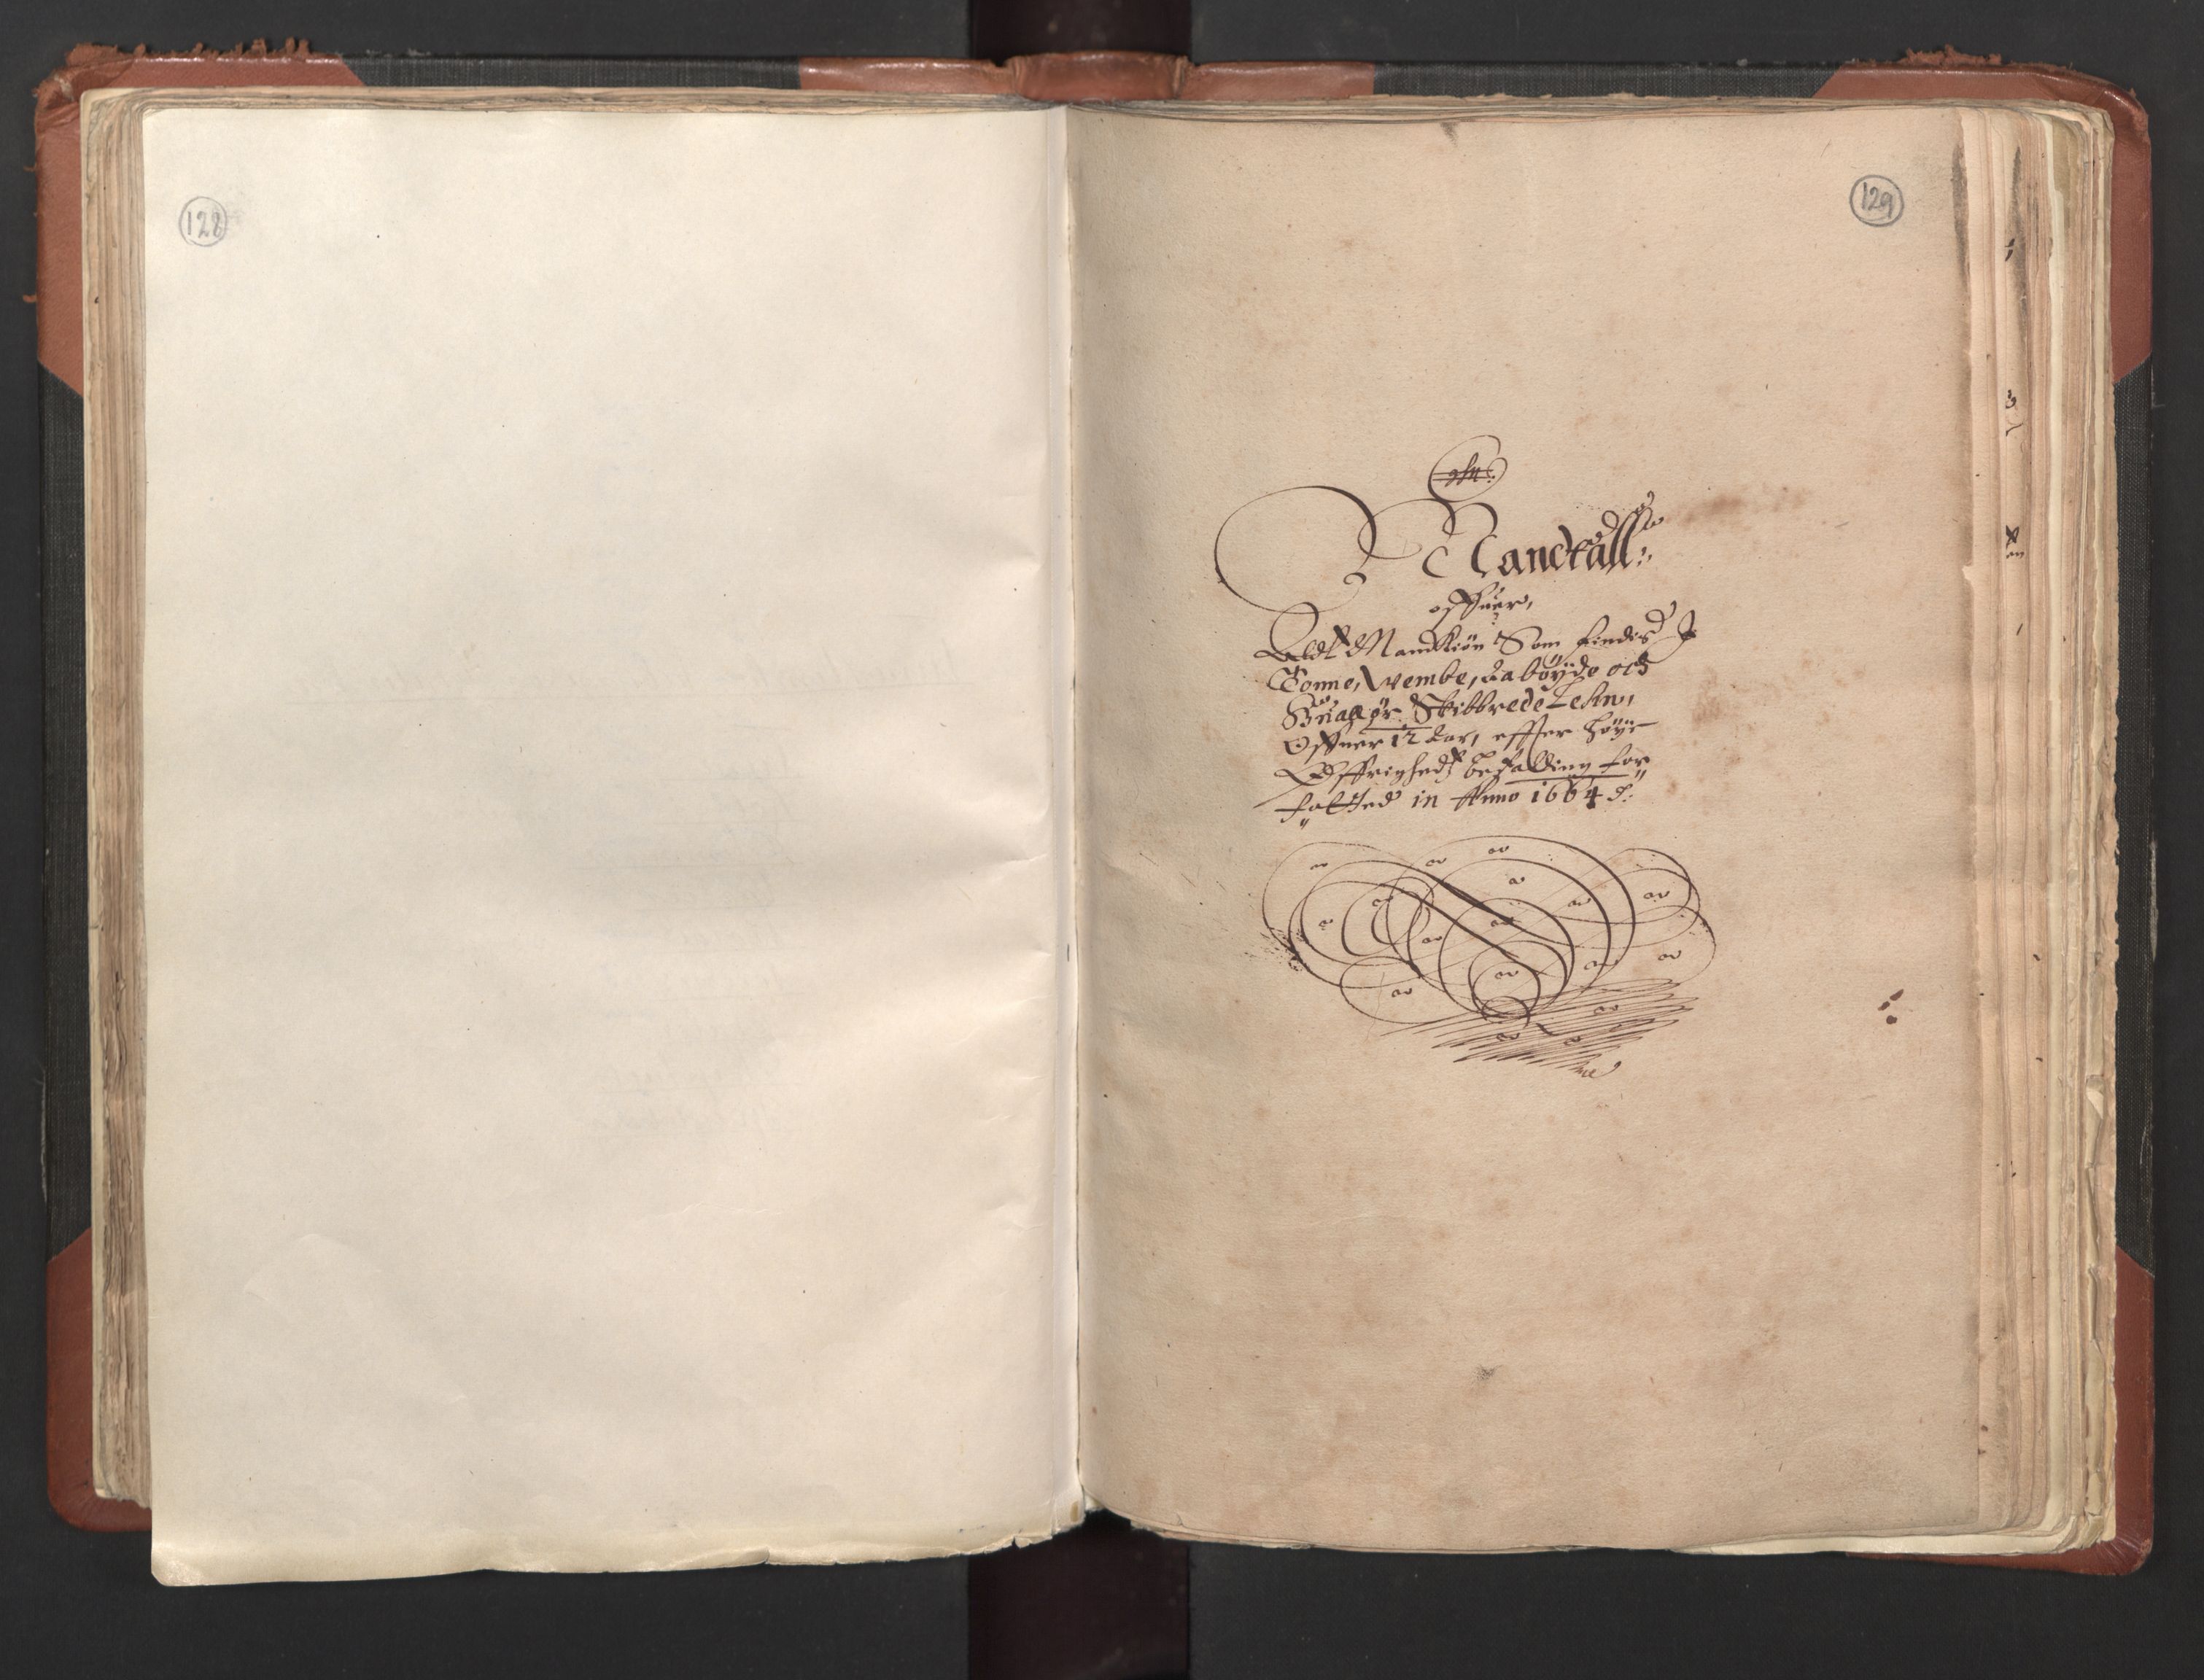 RA, Fogdenes og sorenskrivernes manntall 1664-1666, nr. 1: Fogderier (len og skipreider) i nåværende Østfold fylke, 1664, s. 128-129